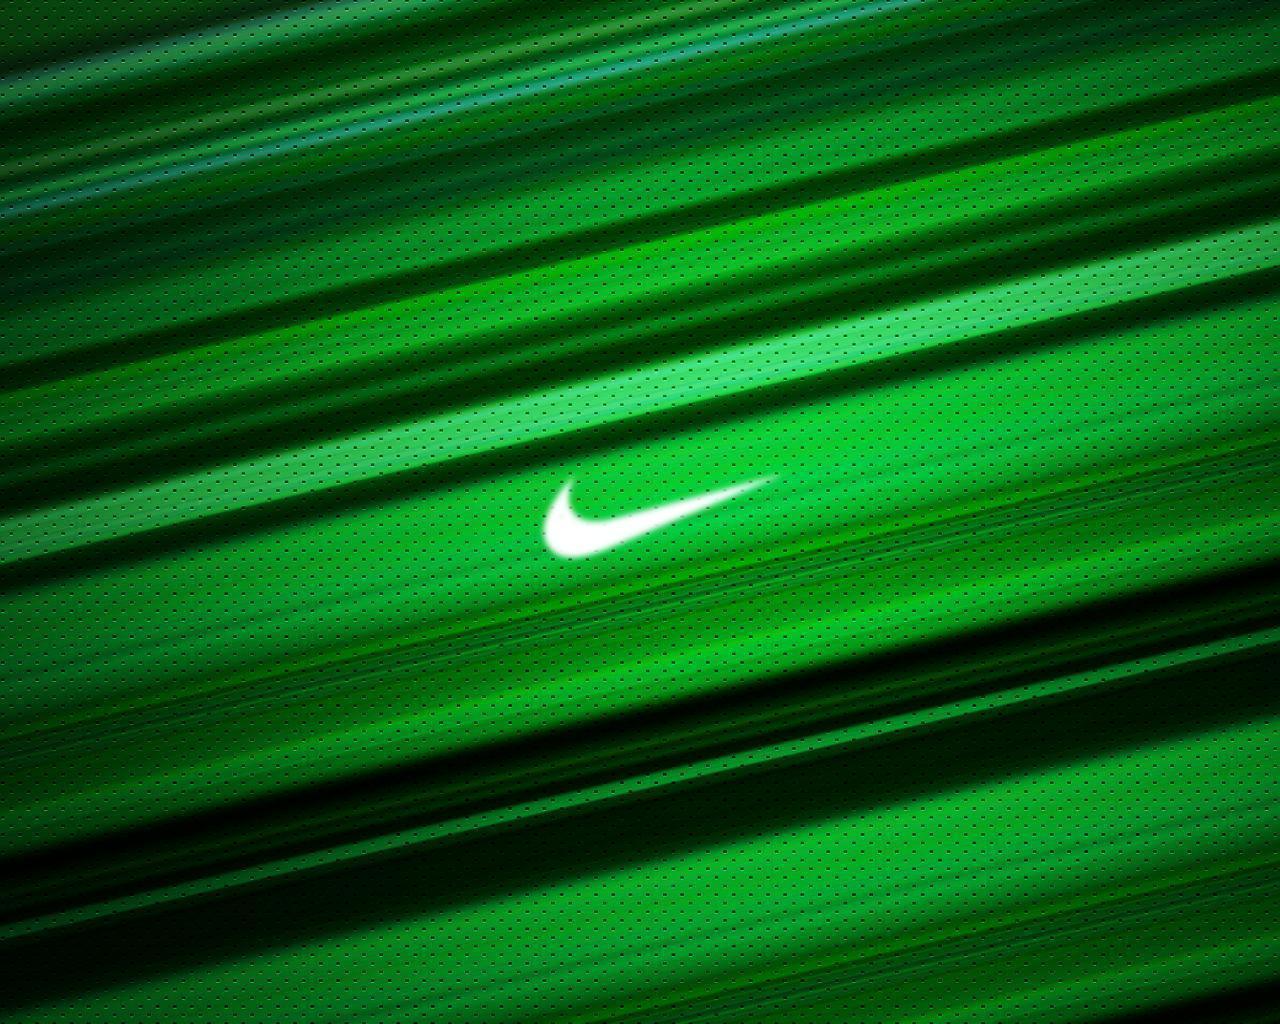 Nike Wallpaper Background For HD Desktop, Laptop, iPhone